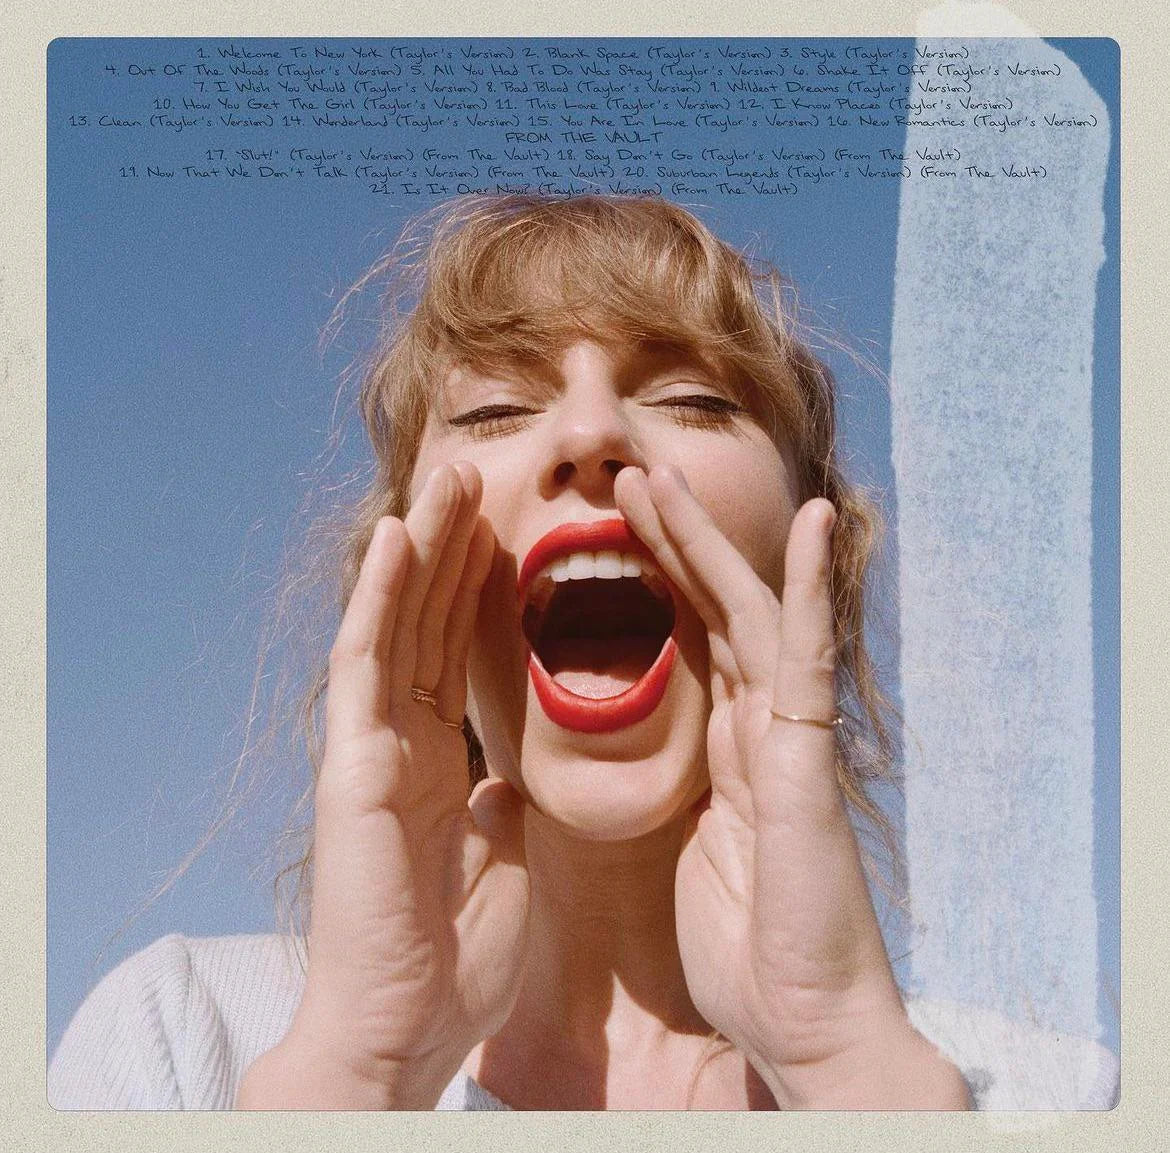 PRE-ORDER: Taylor Swift - 1989 Taylor's Version LP (Crystal Skies Blue Vinyl, Deluxe Edition, Bonus Tracks, Photos / Photo Cards)